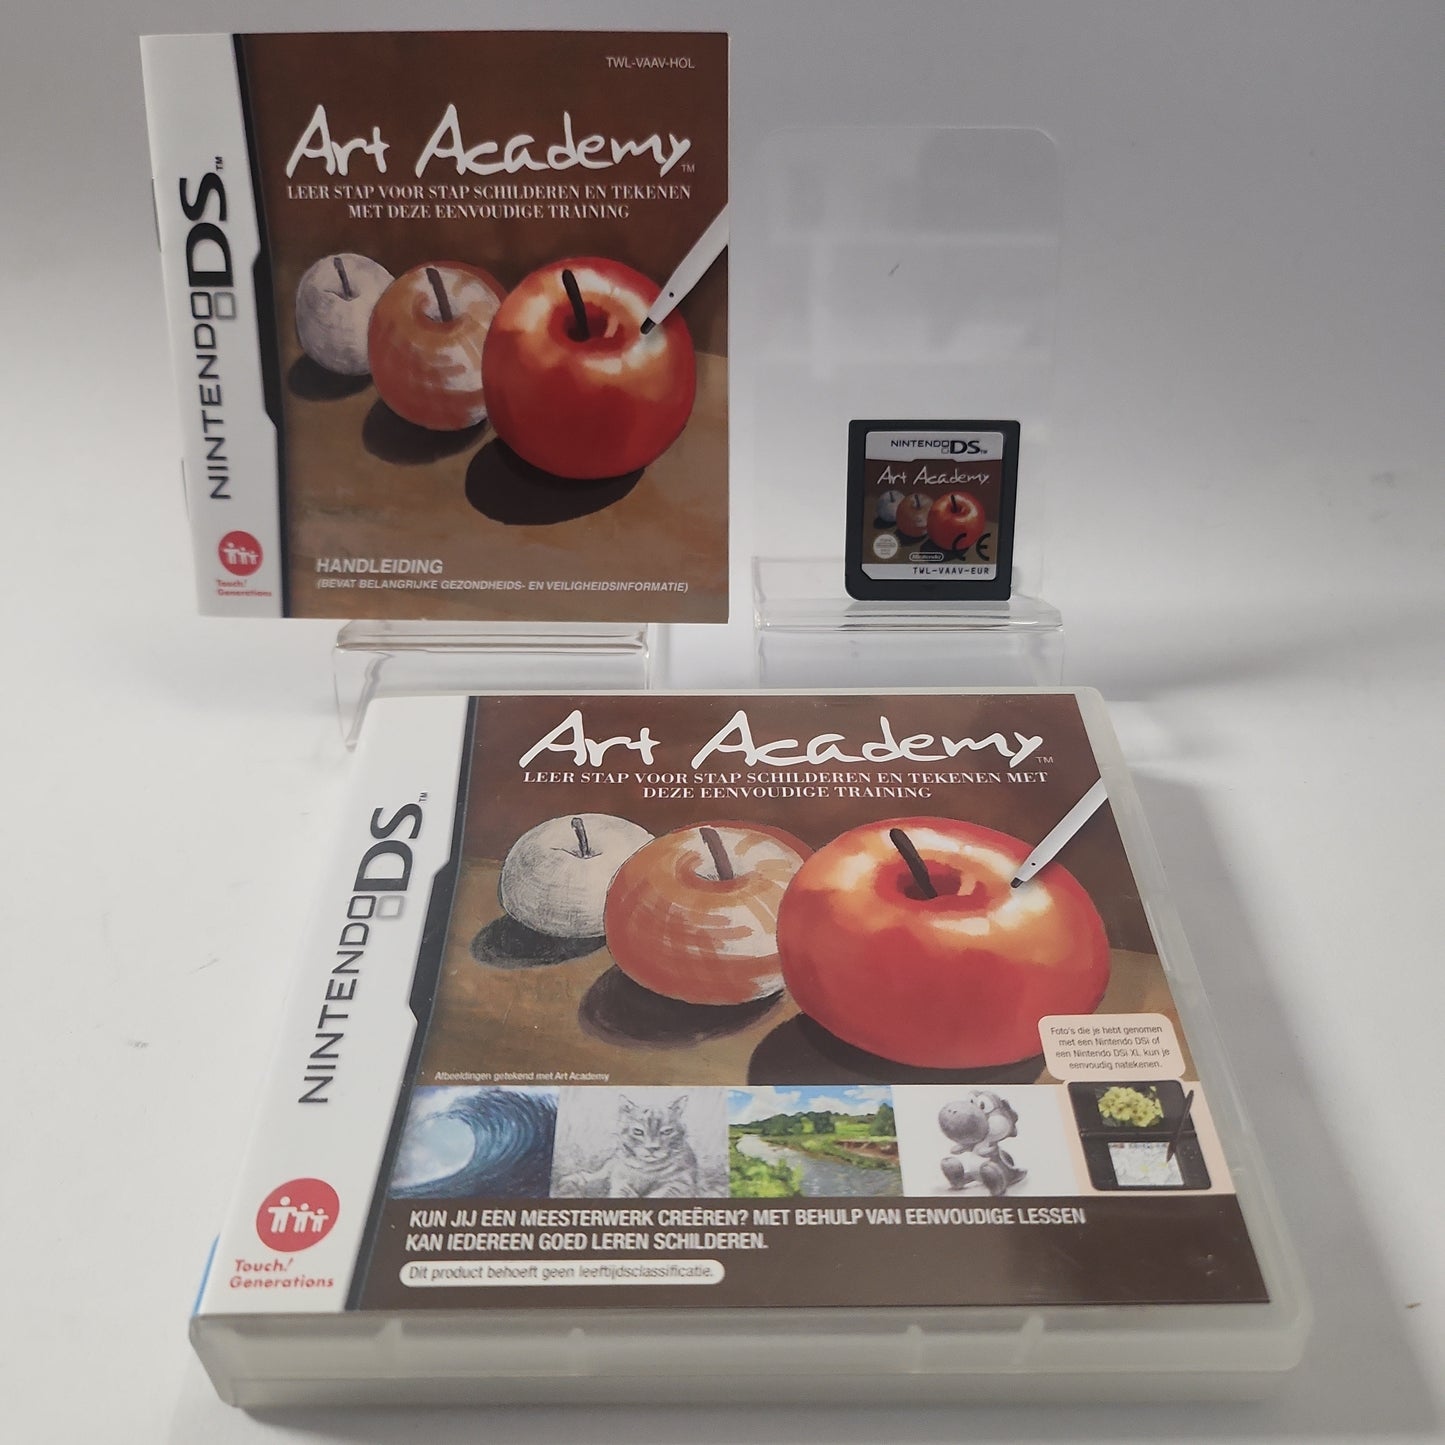 Art Academy Nintendo DS